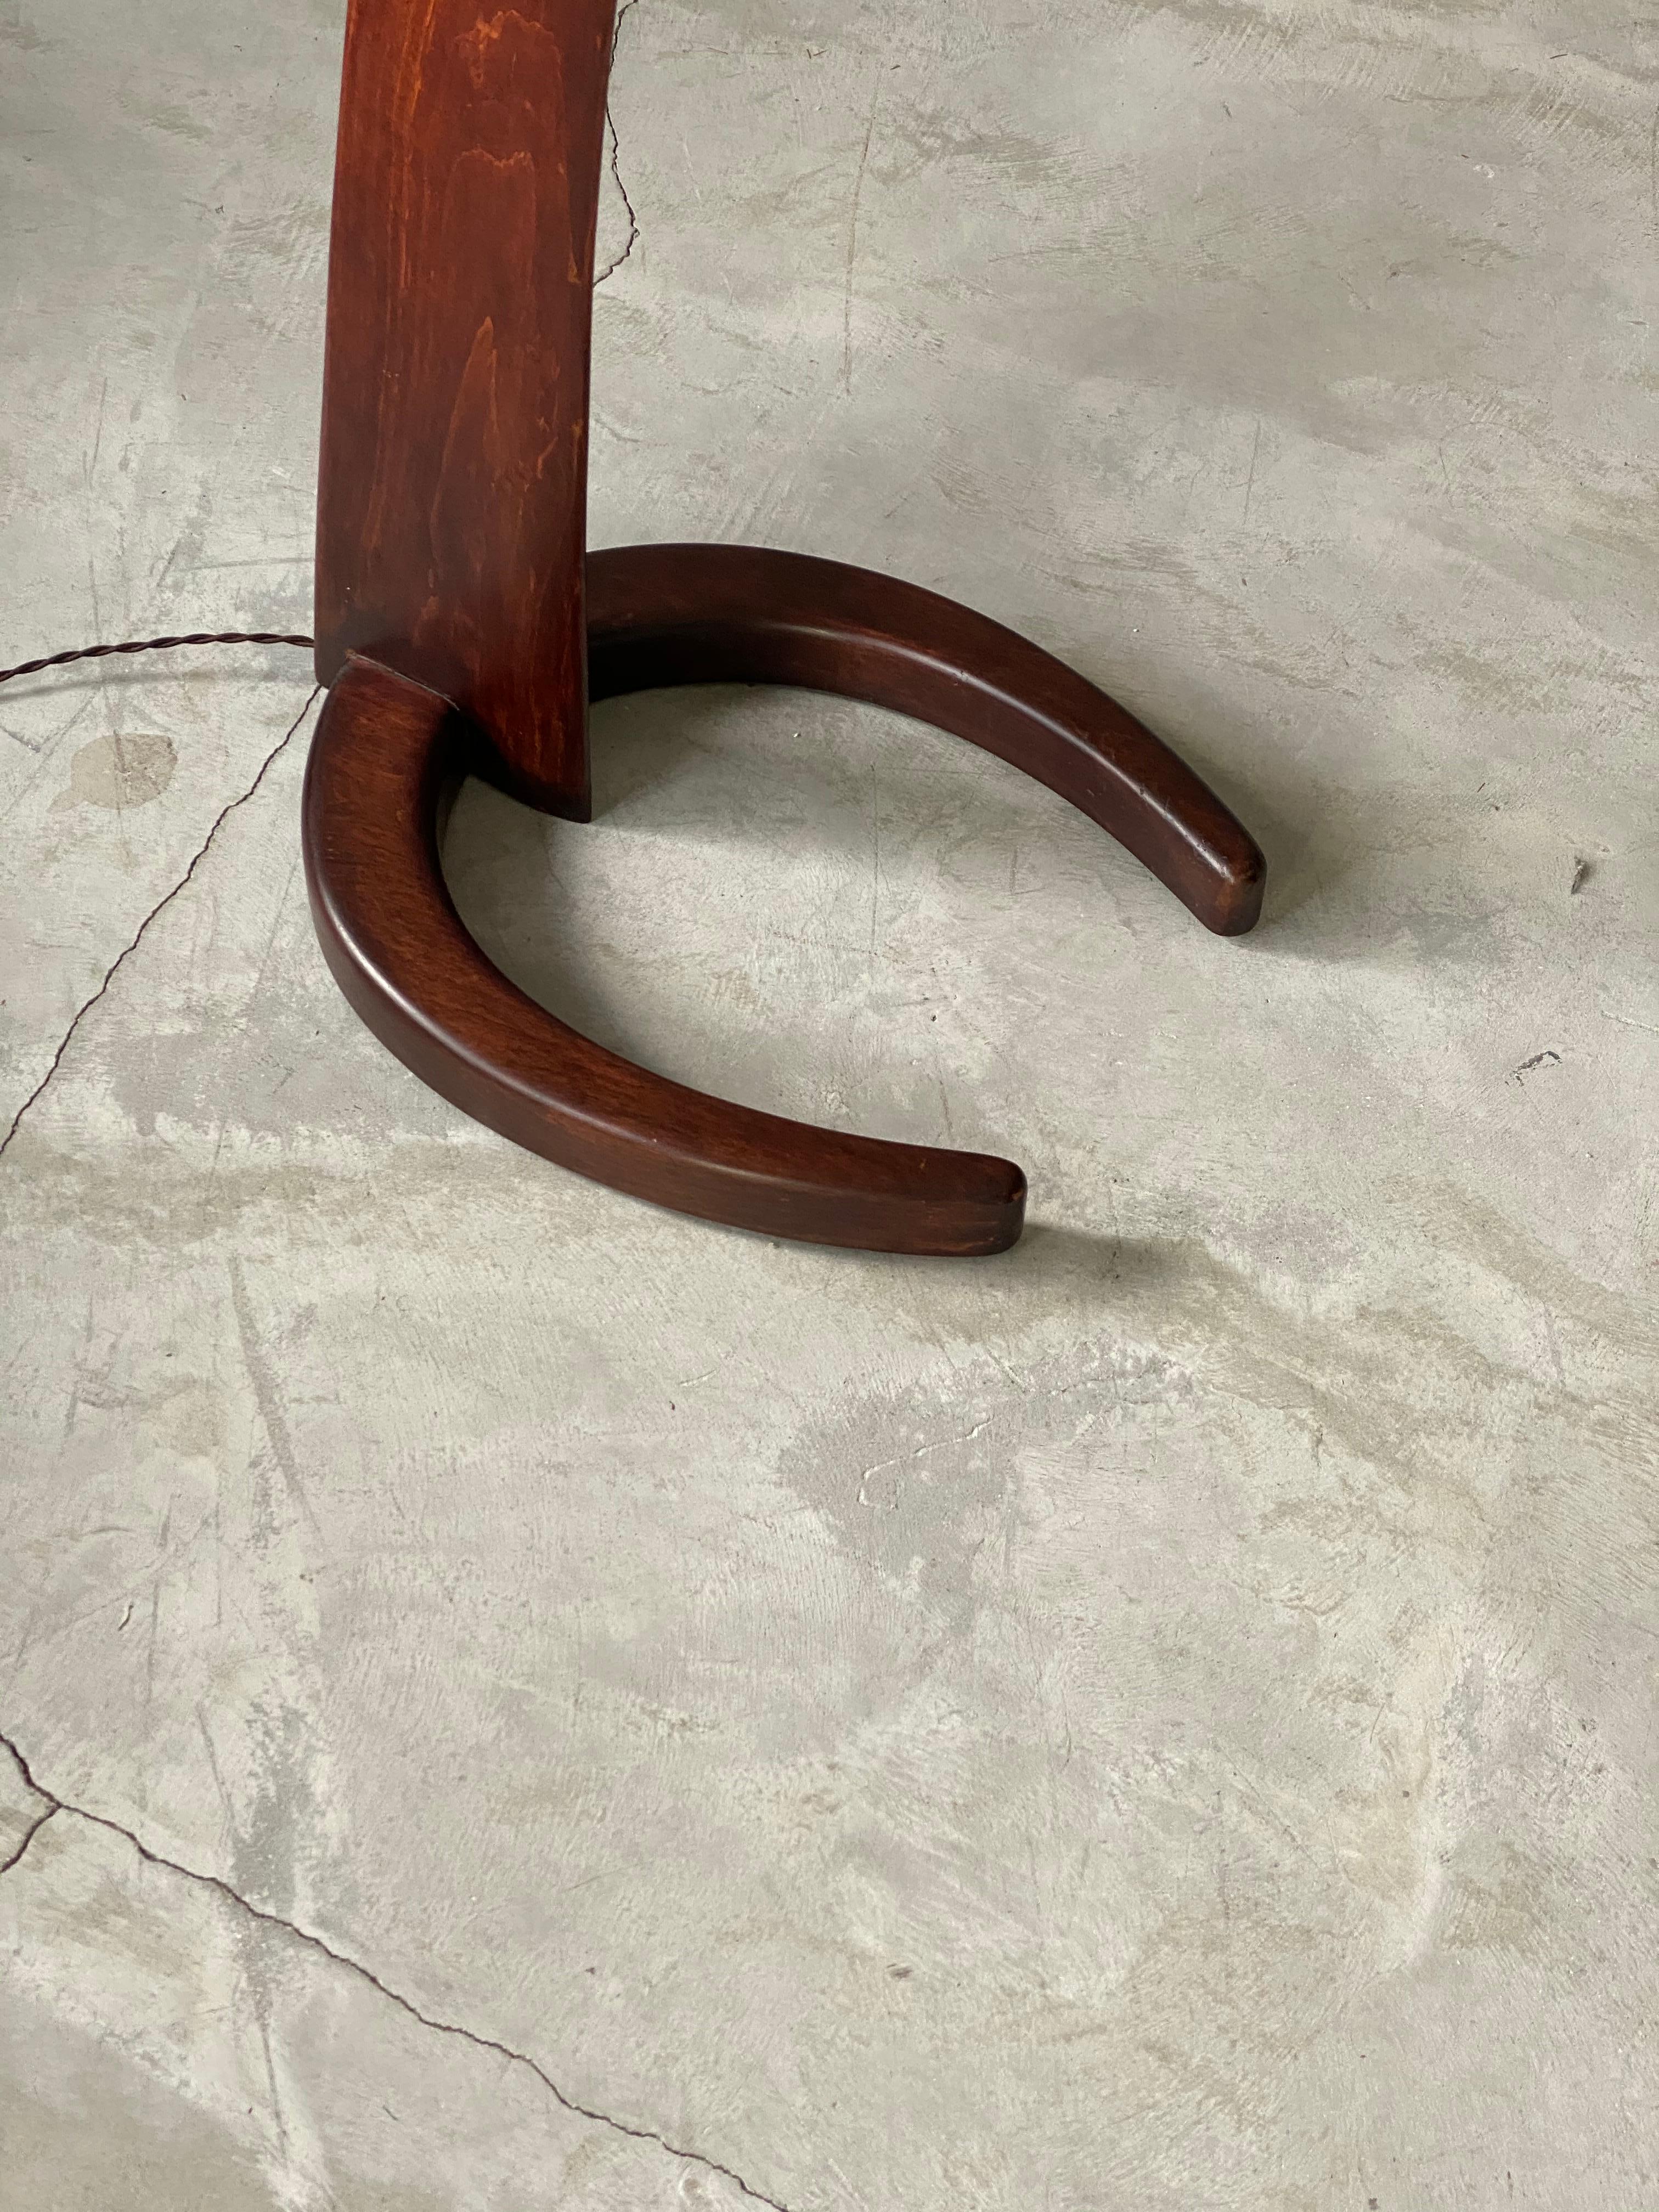 curved wood floor lamp